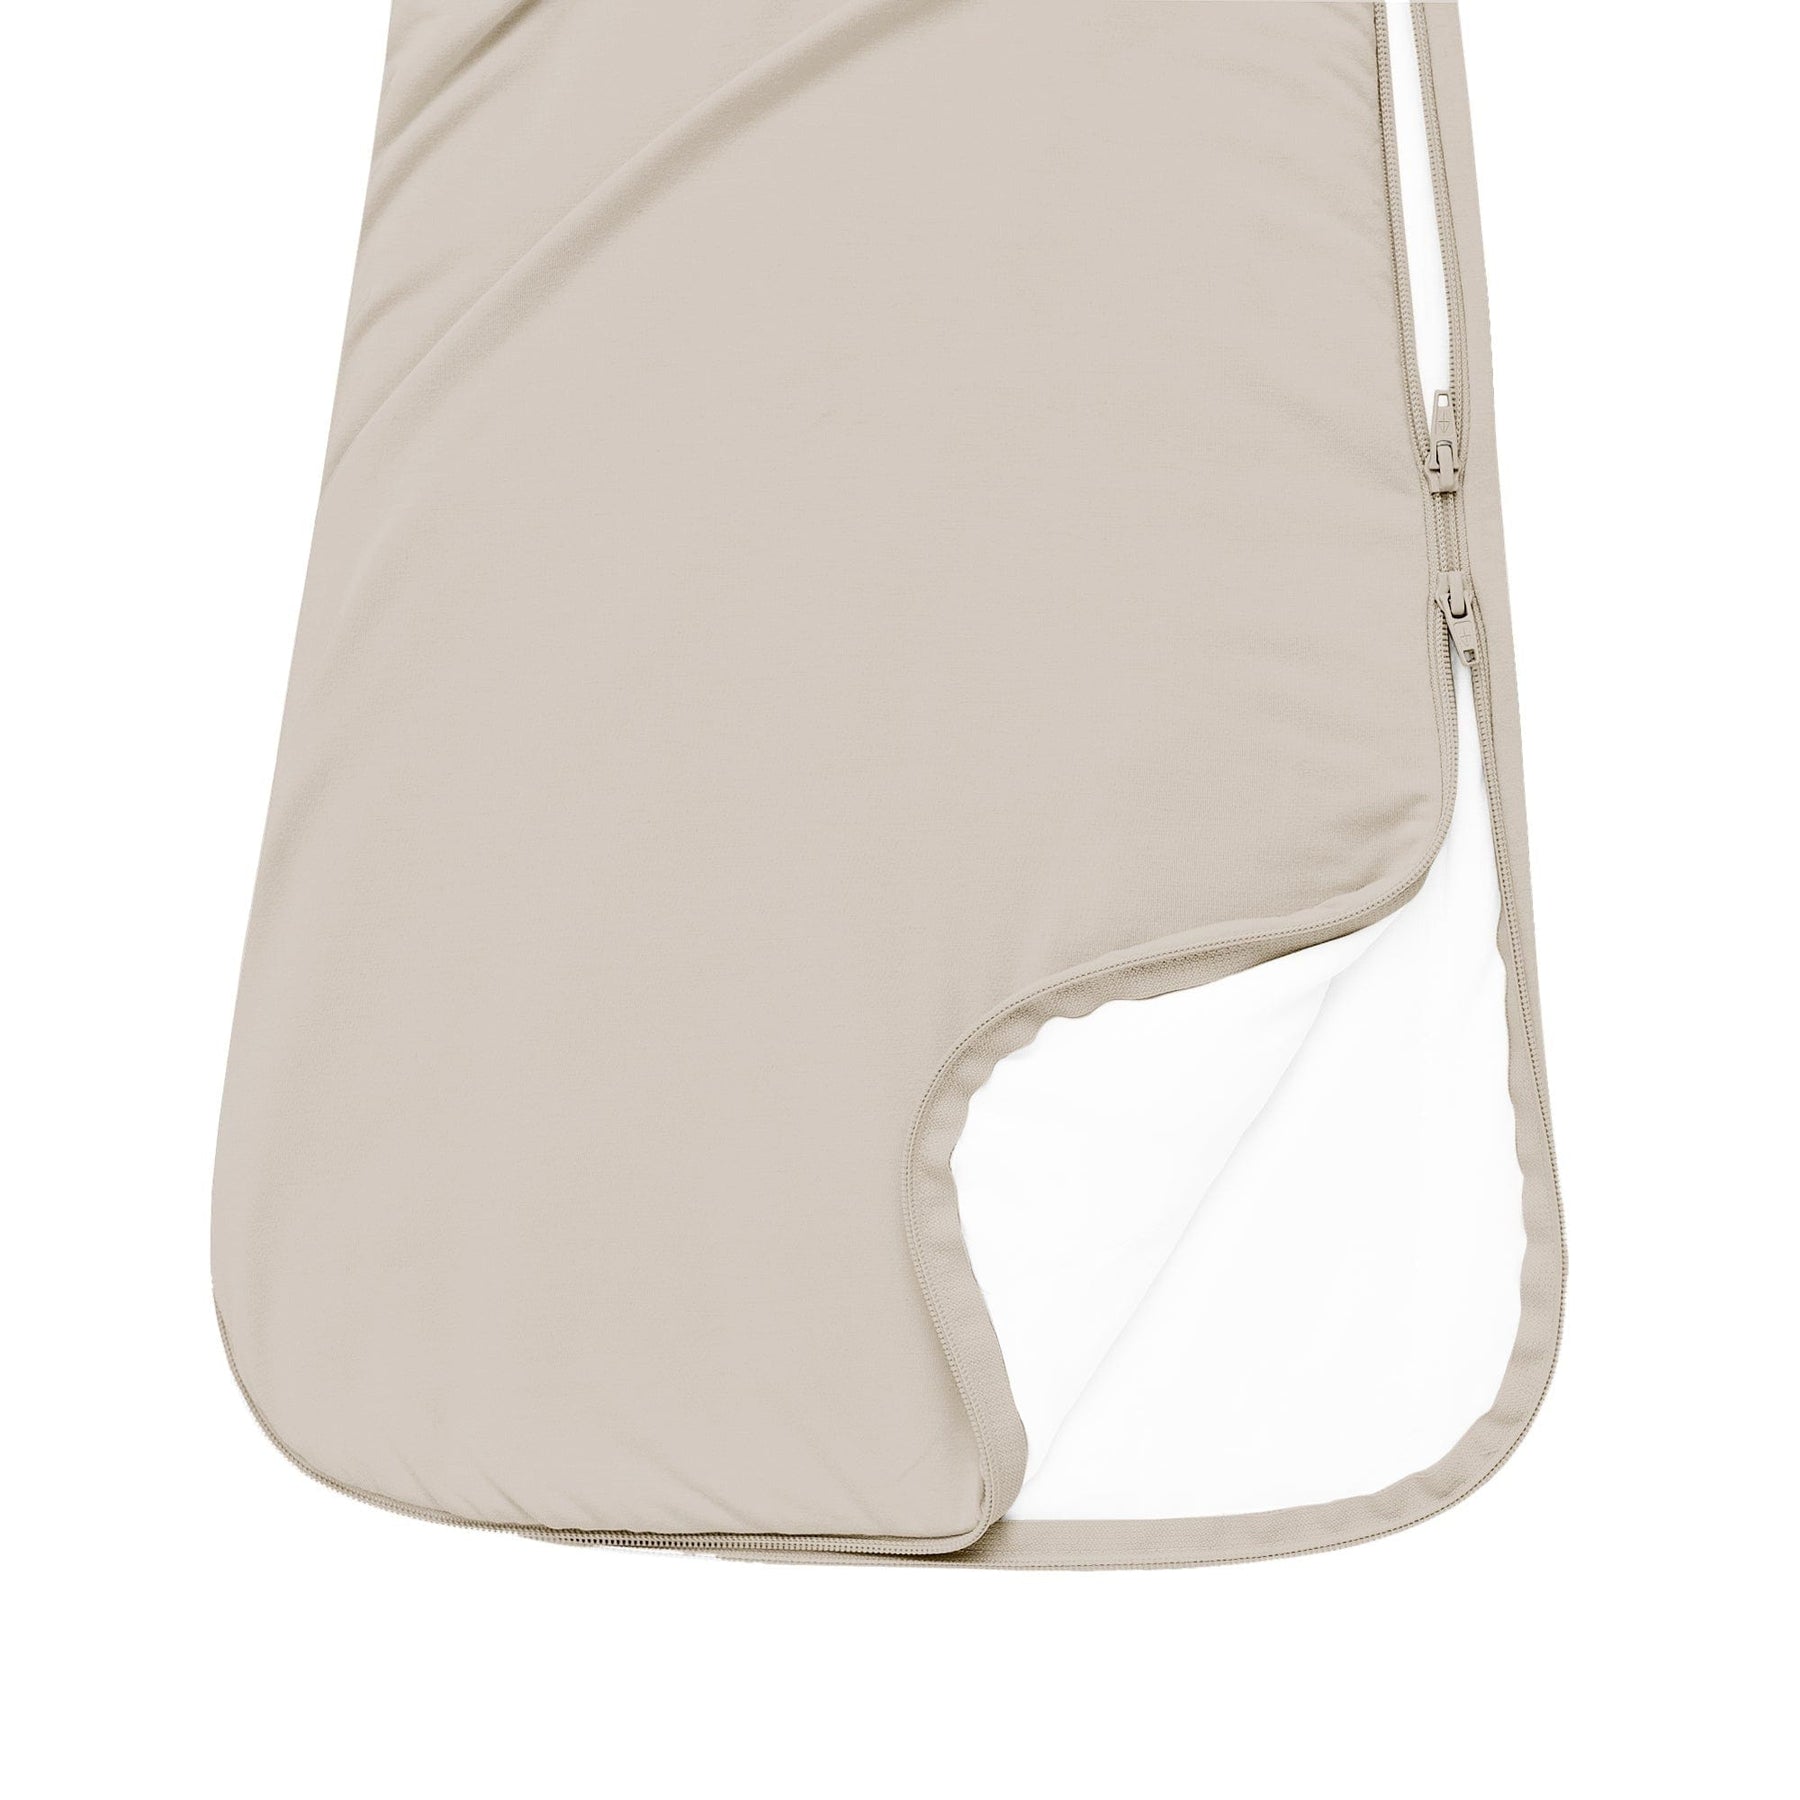 Kyte BABY Sleep Bag 1.0 Tog Sleep Bag in Khaki 1.0